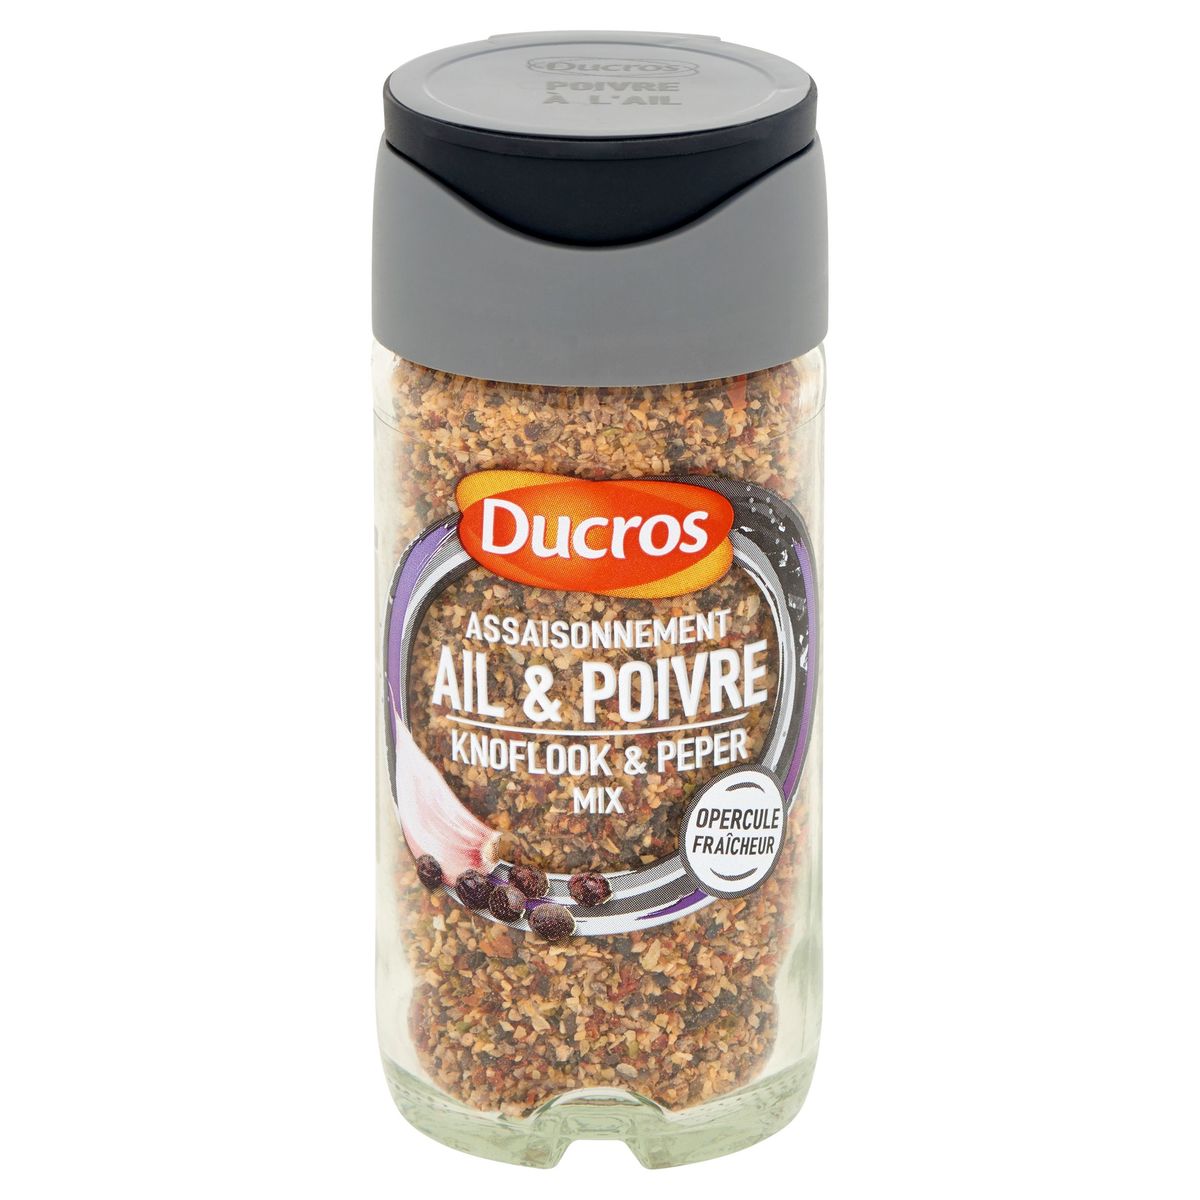 Ducros Knoflook & Peper Mix 45 g